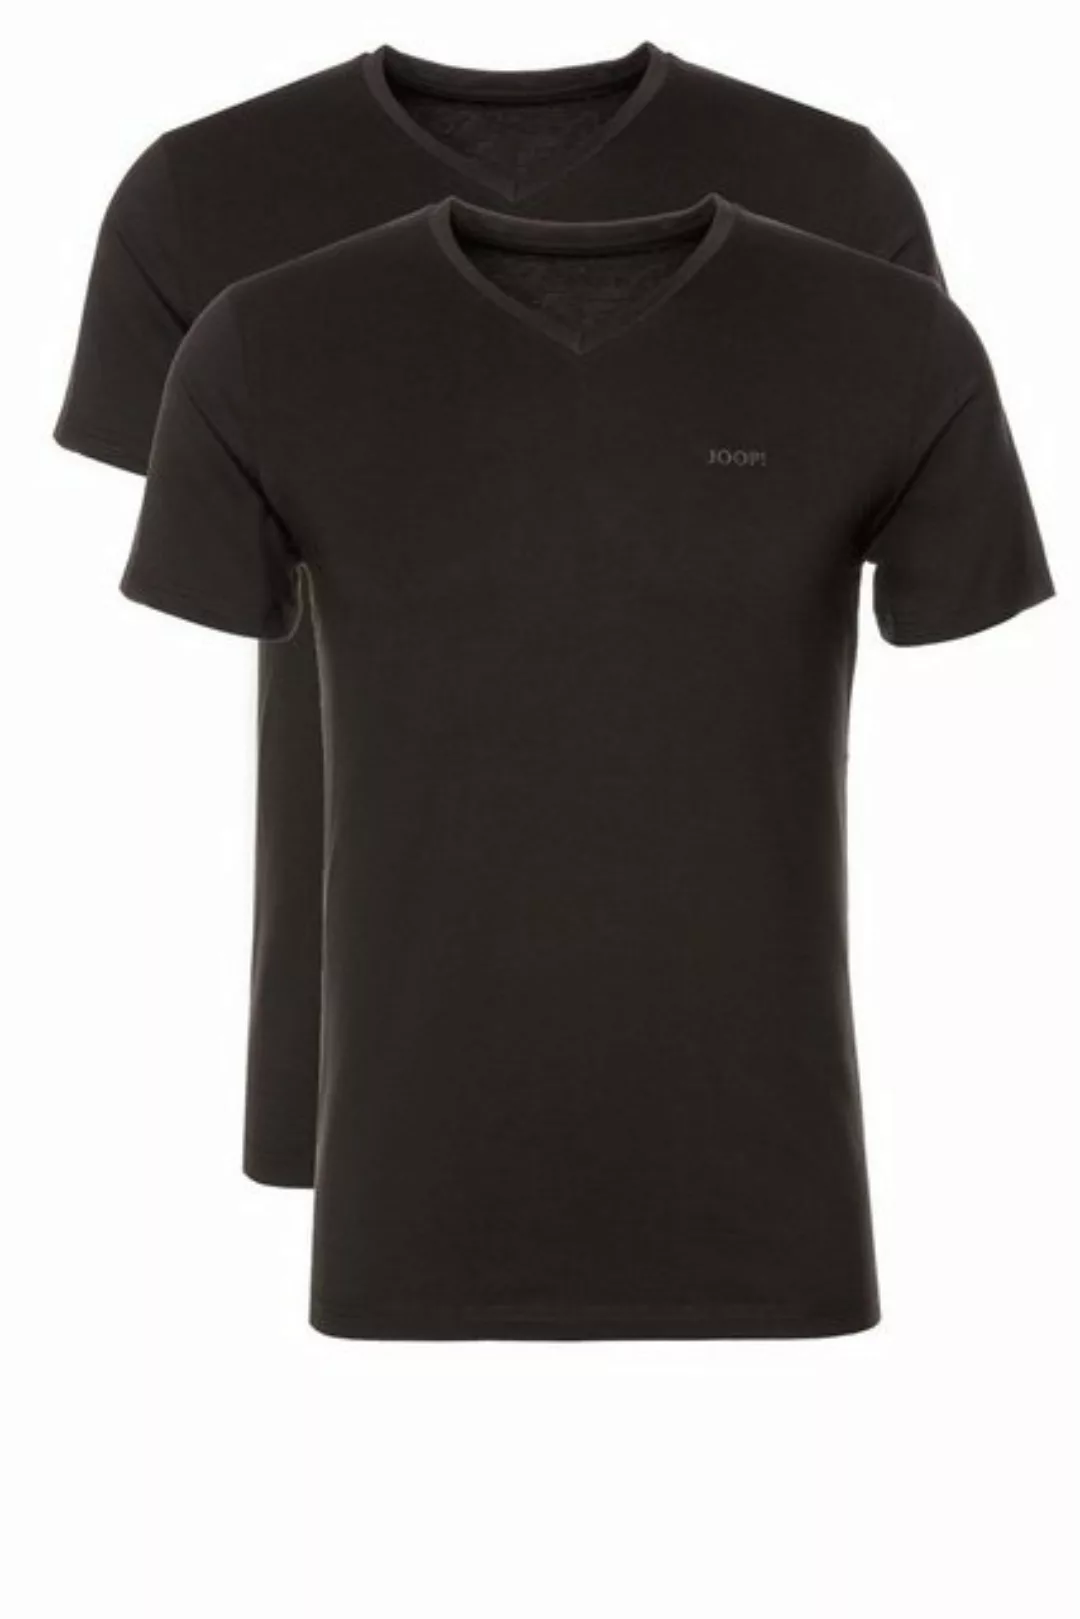 JOOP! T-Shirt 2erPack-V 30030786/001 günstig online kaufen